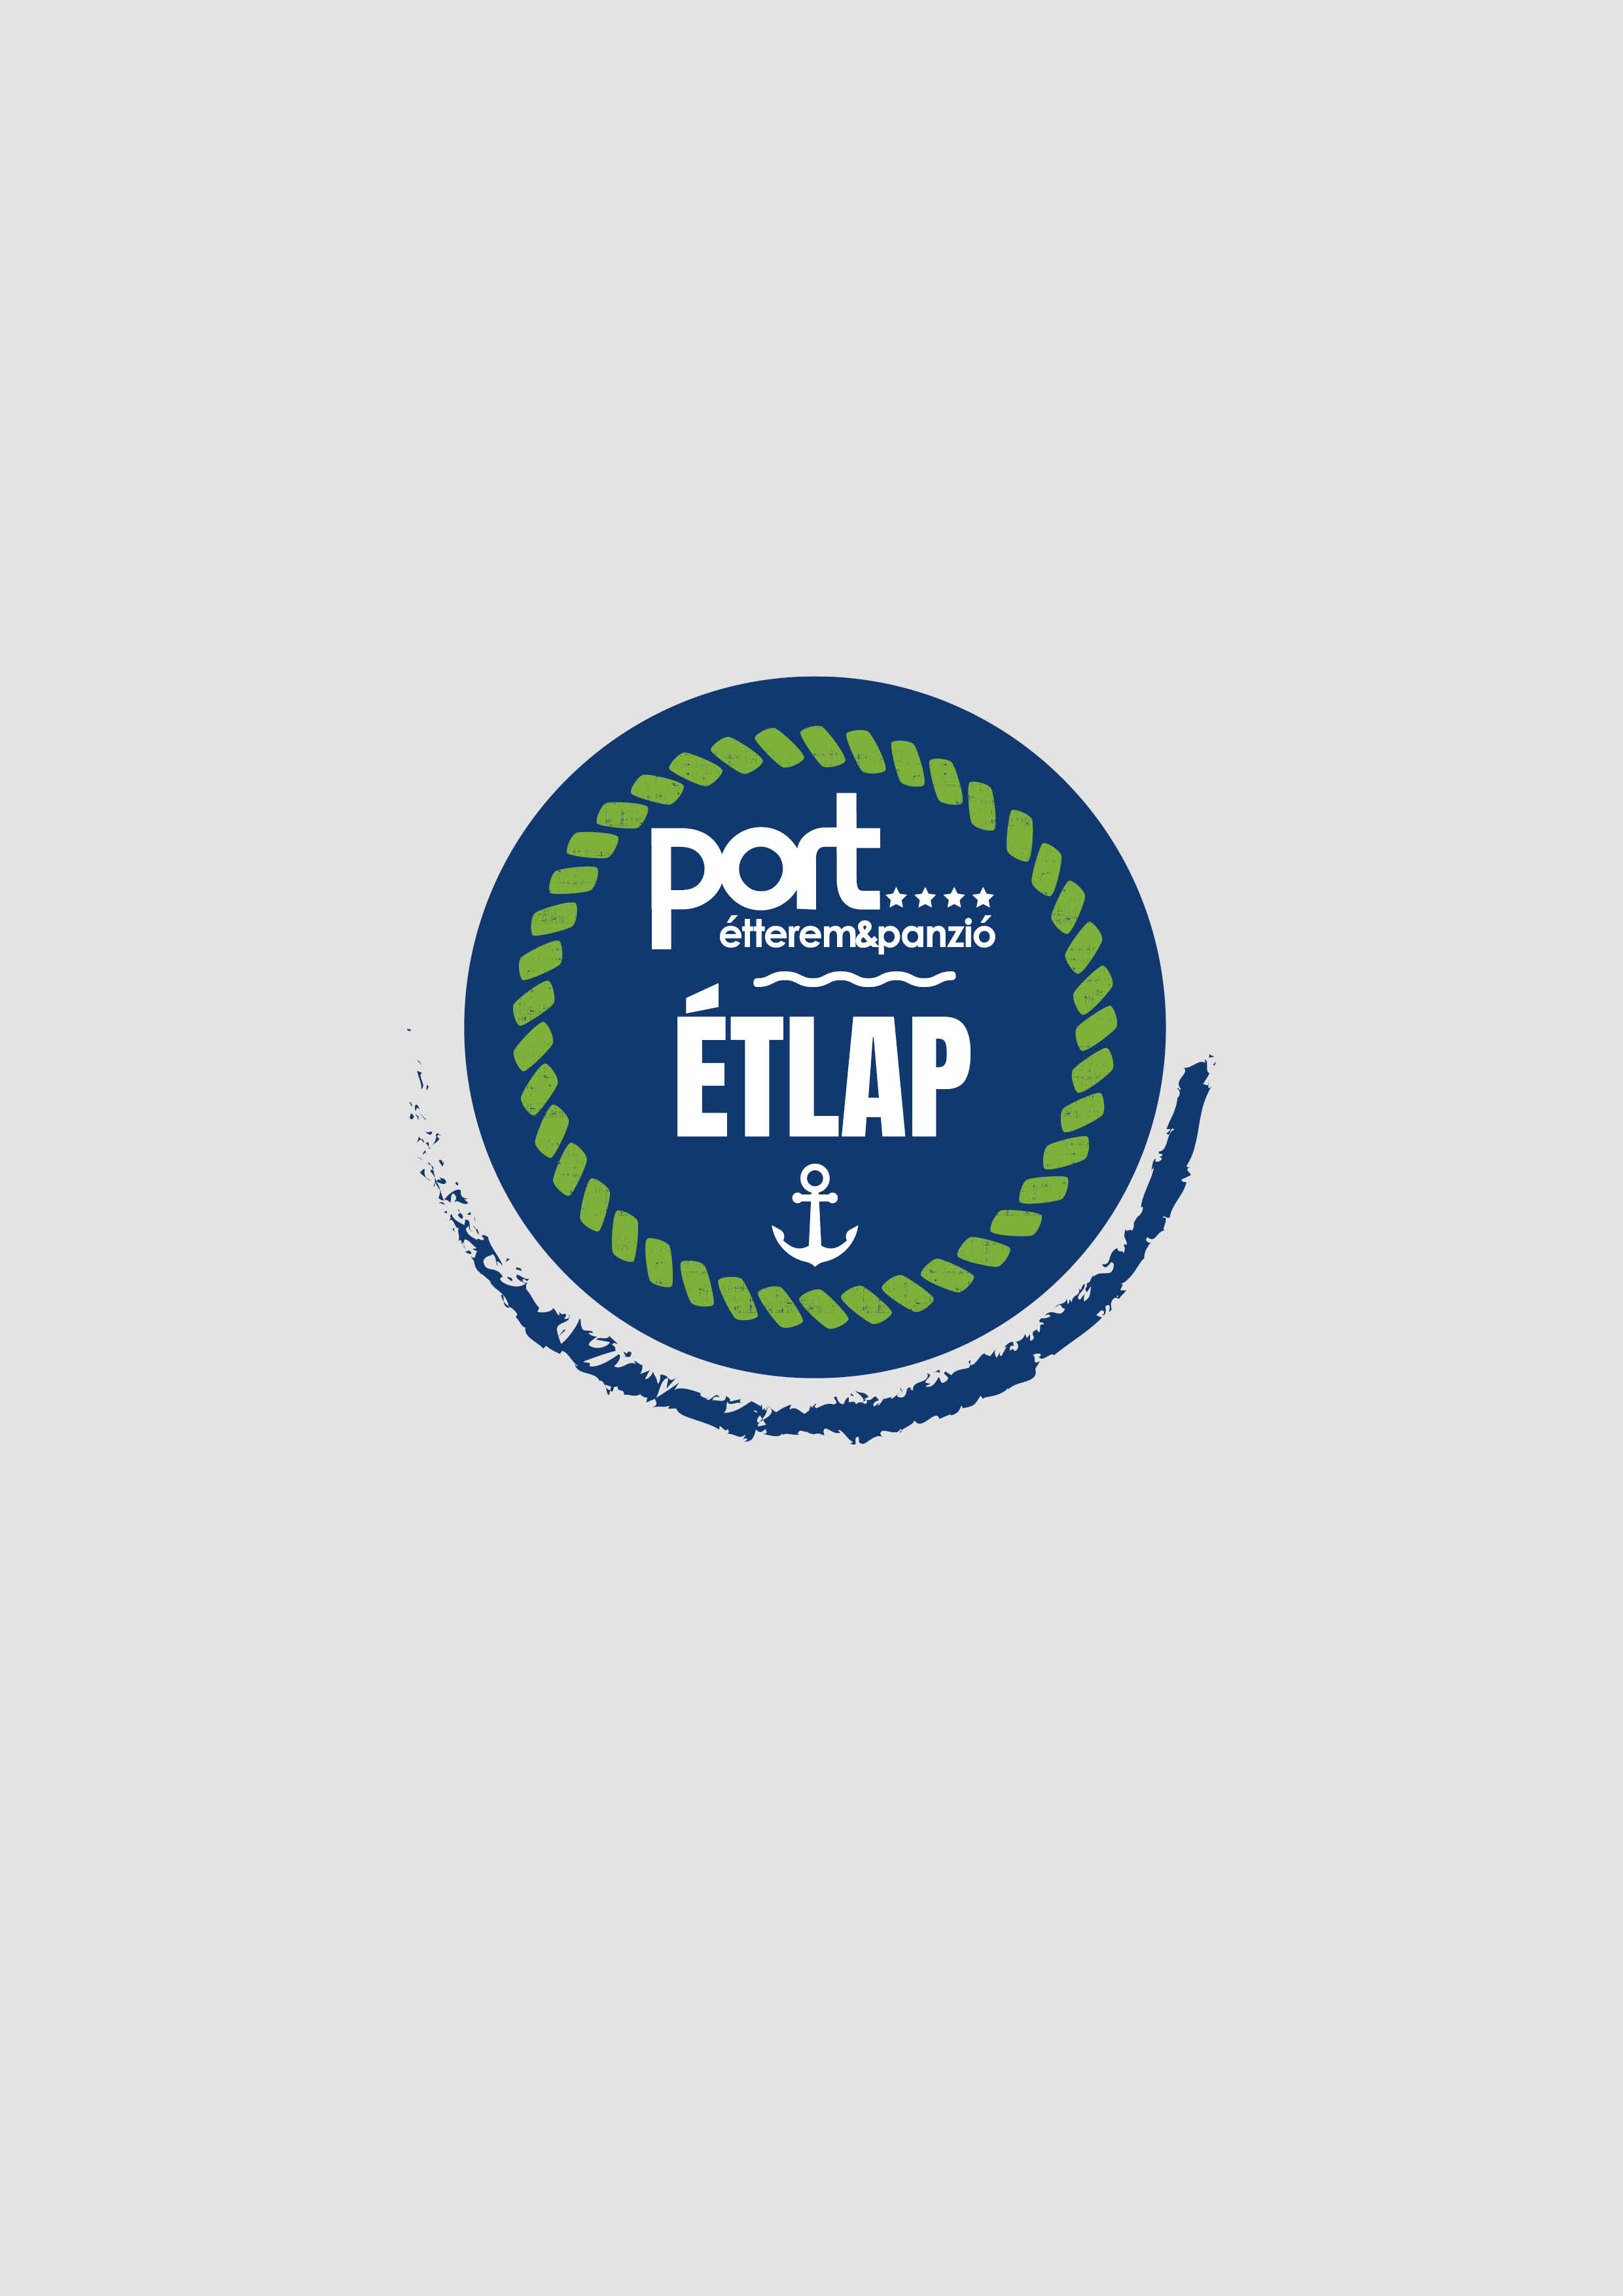 Port étlap_November-December